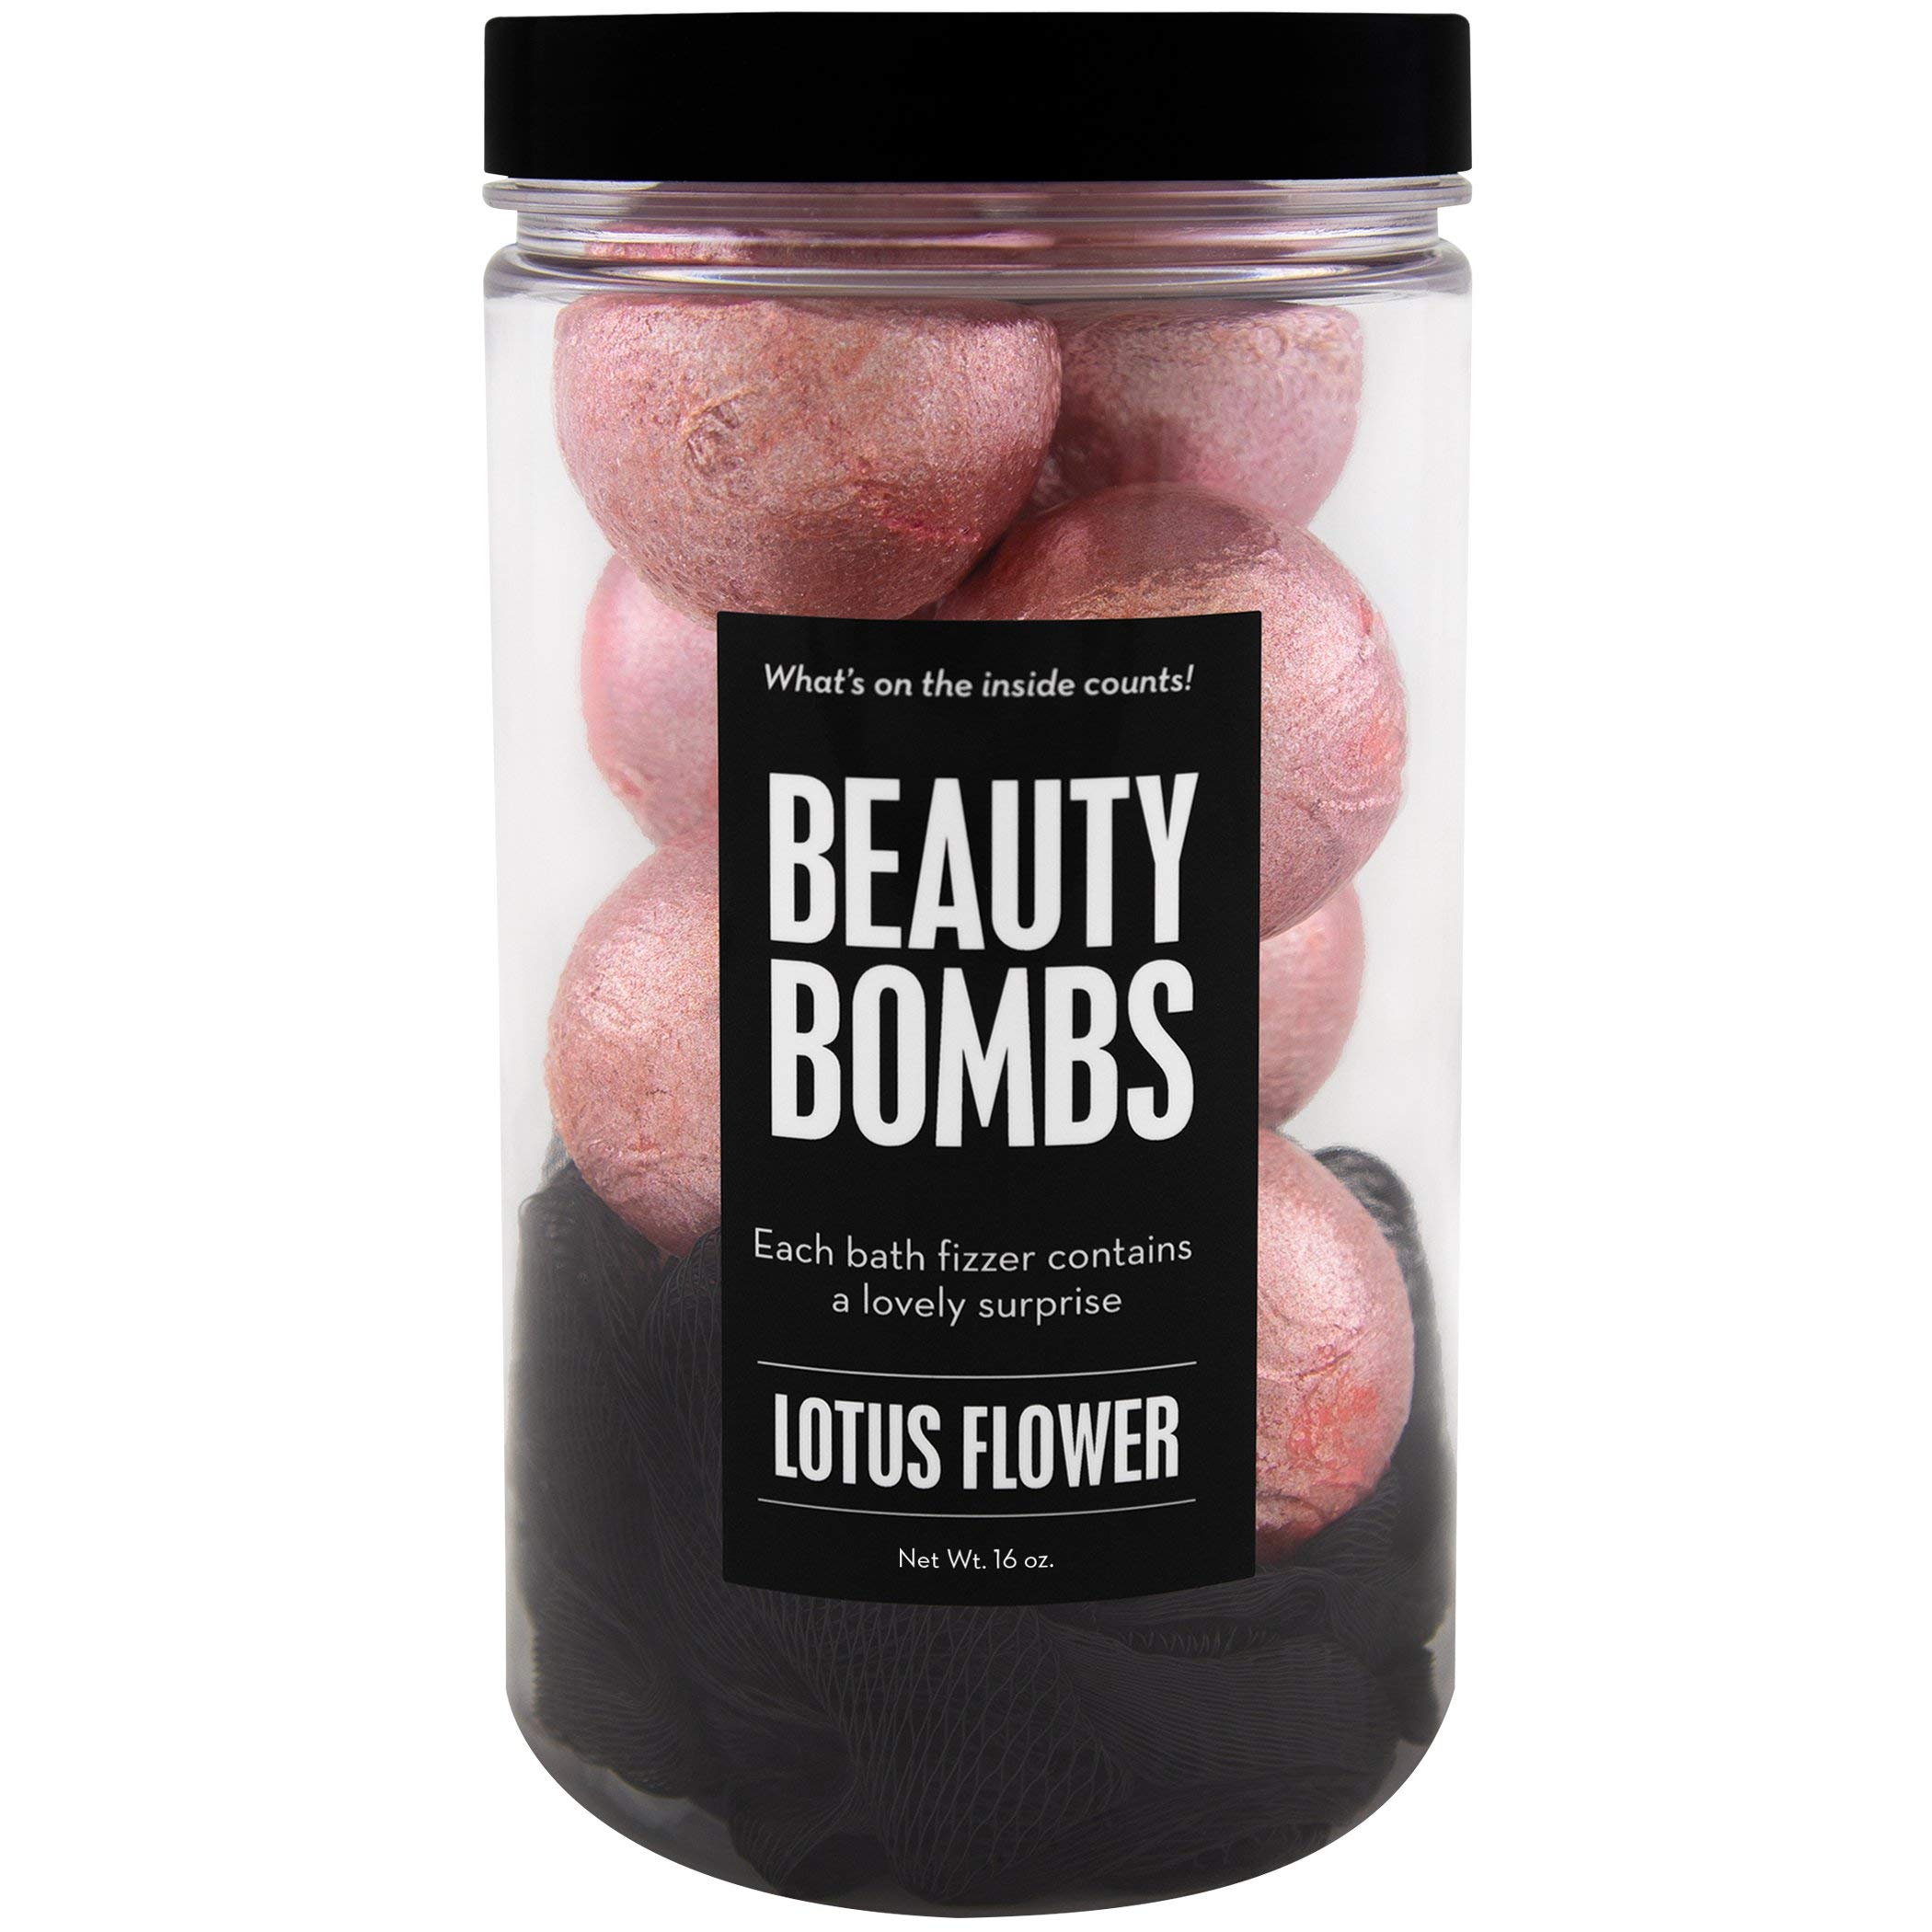 DA BOMB Beauty Bath Bombs Jar, 16oz, 8 minis with loofah